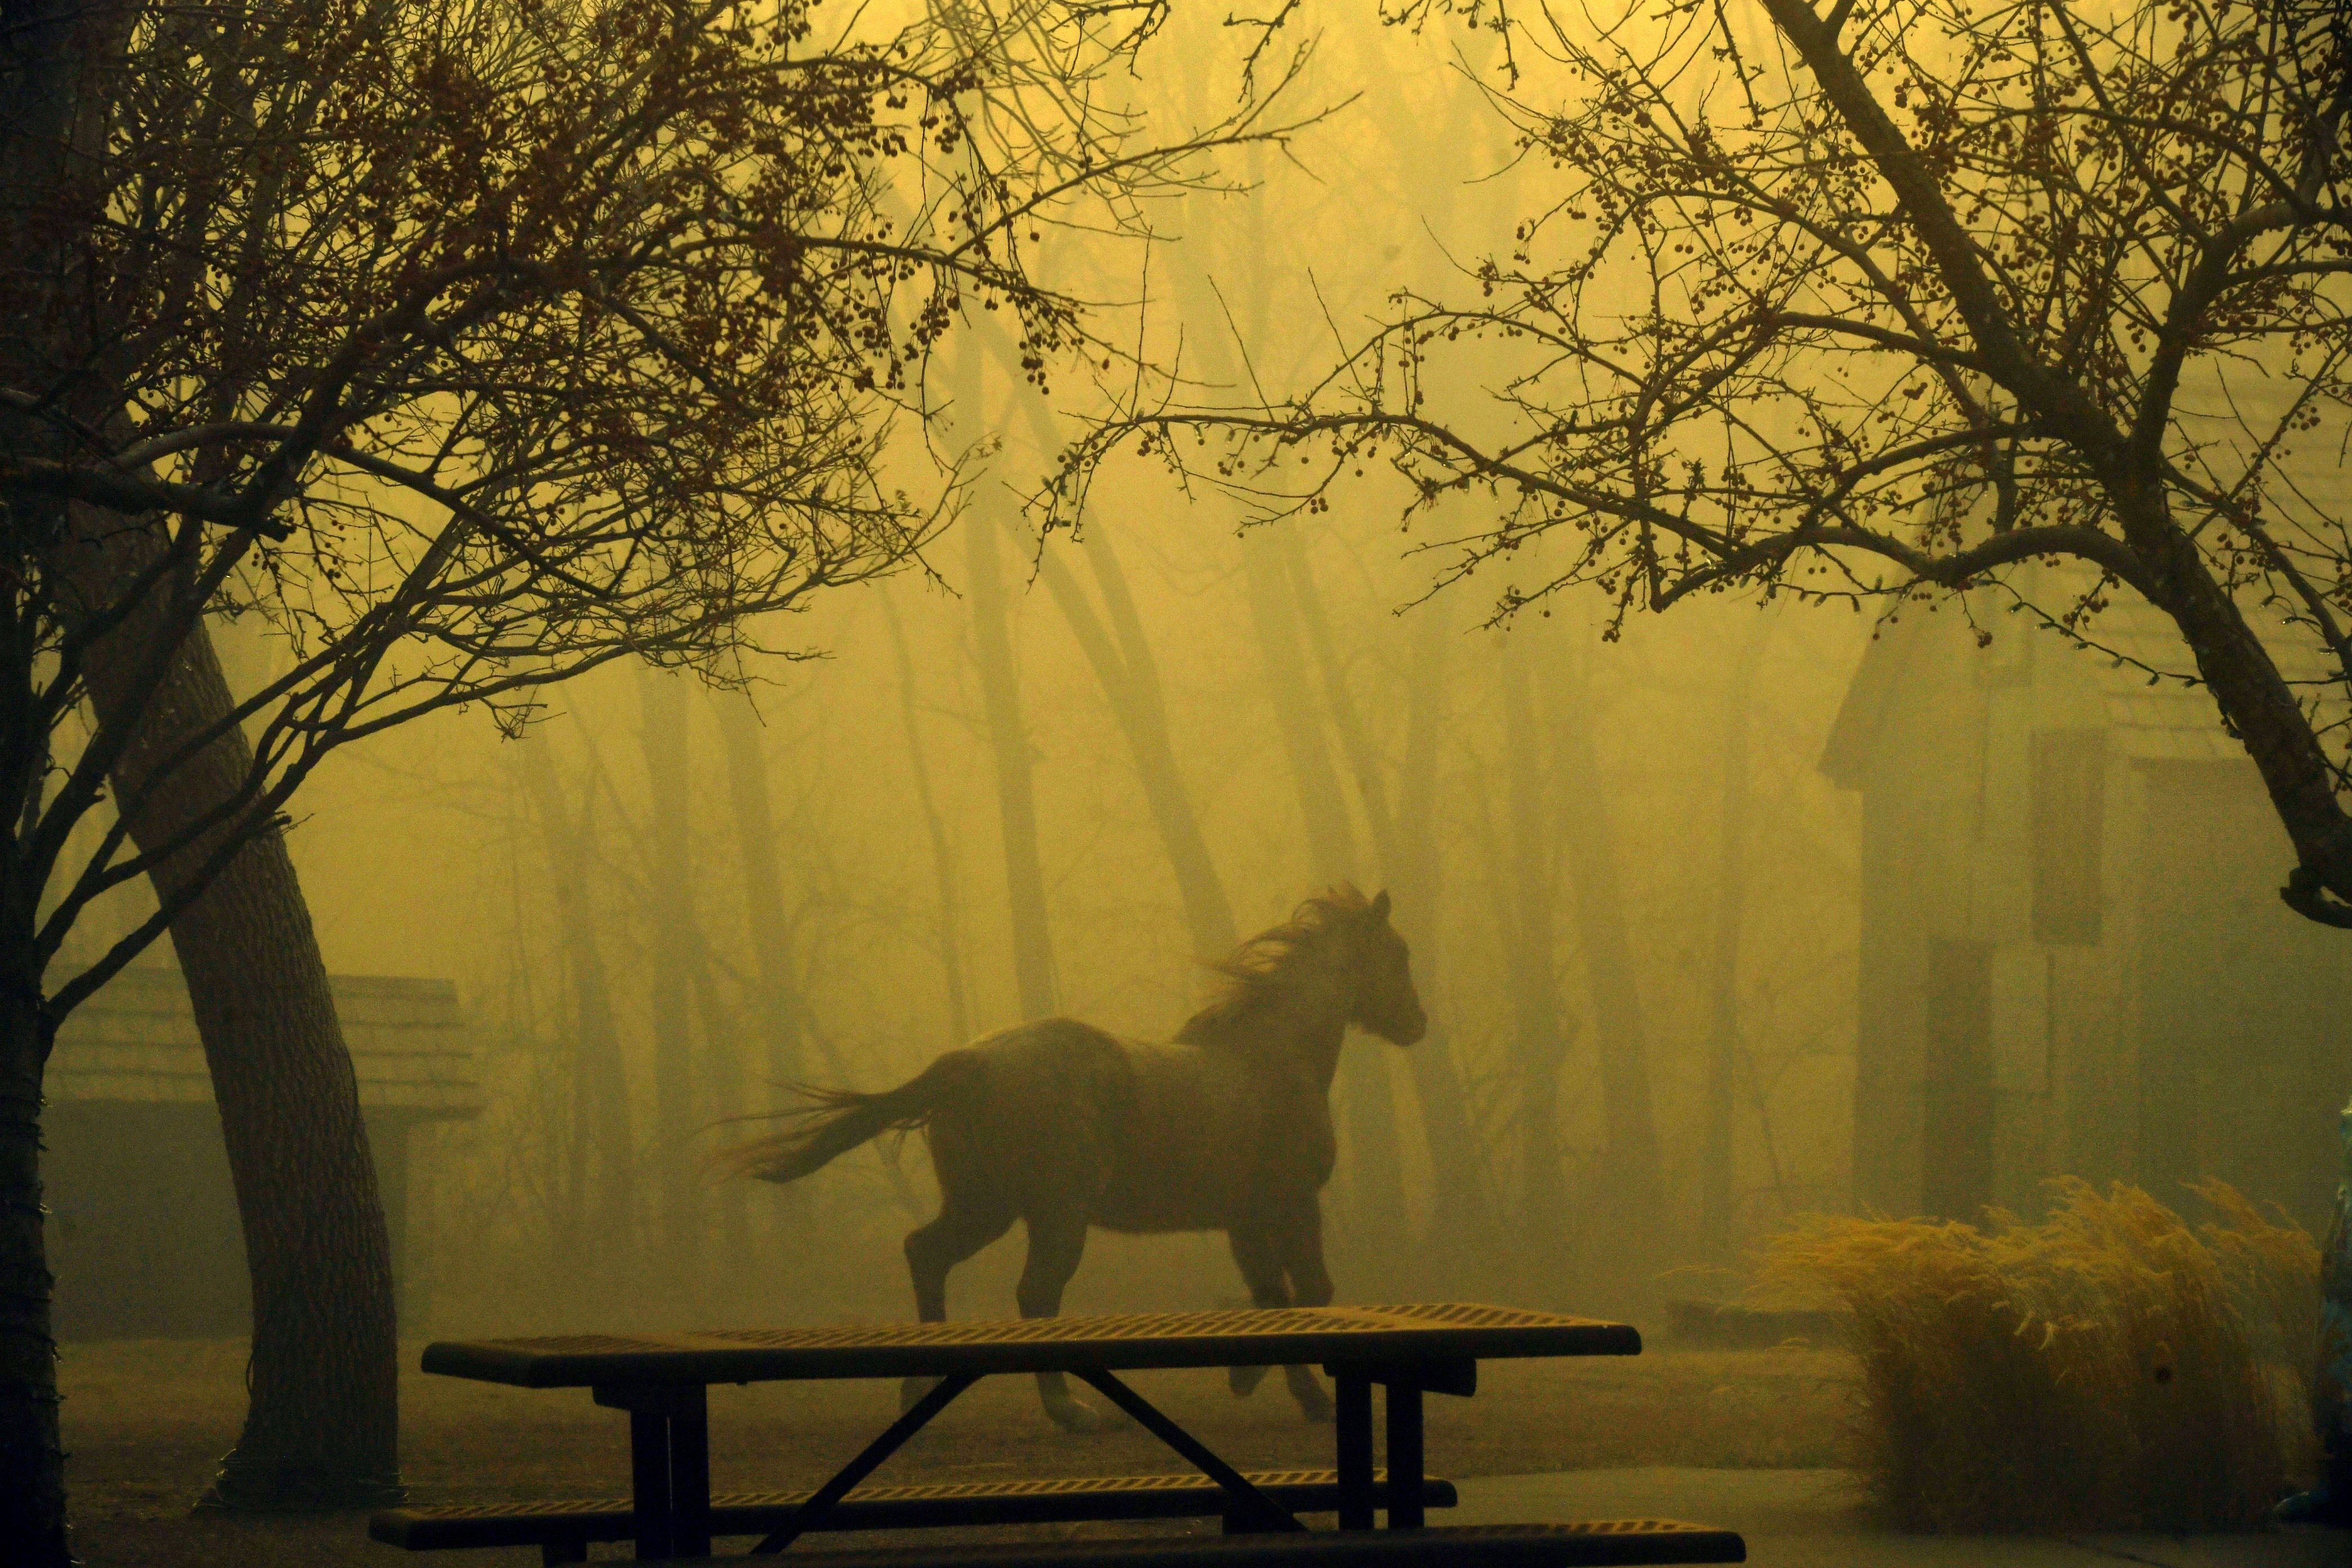  A horse runs through Grasso Park on December 30, 2021 in Superior.